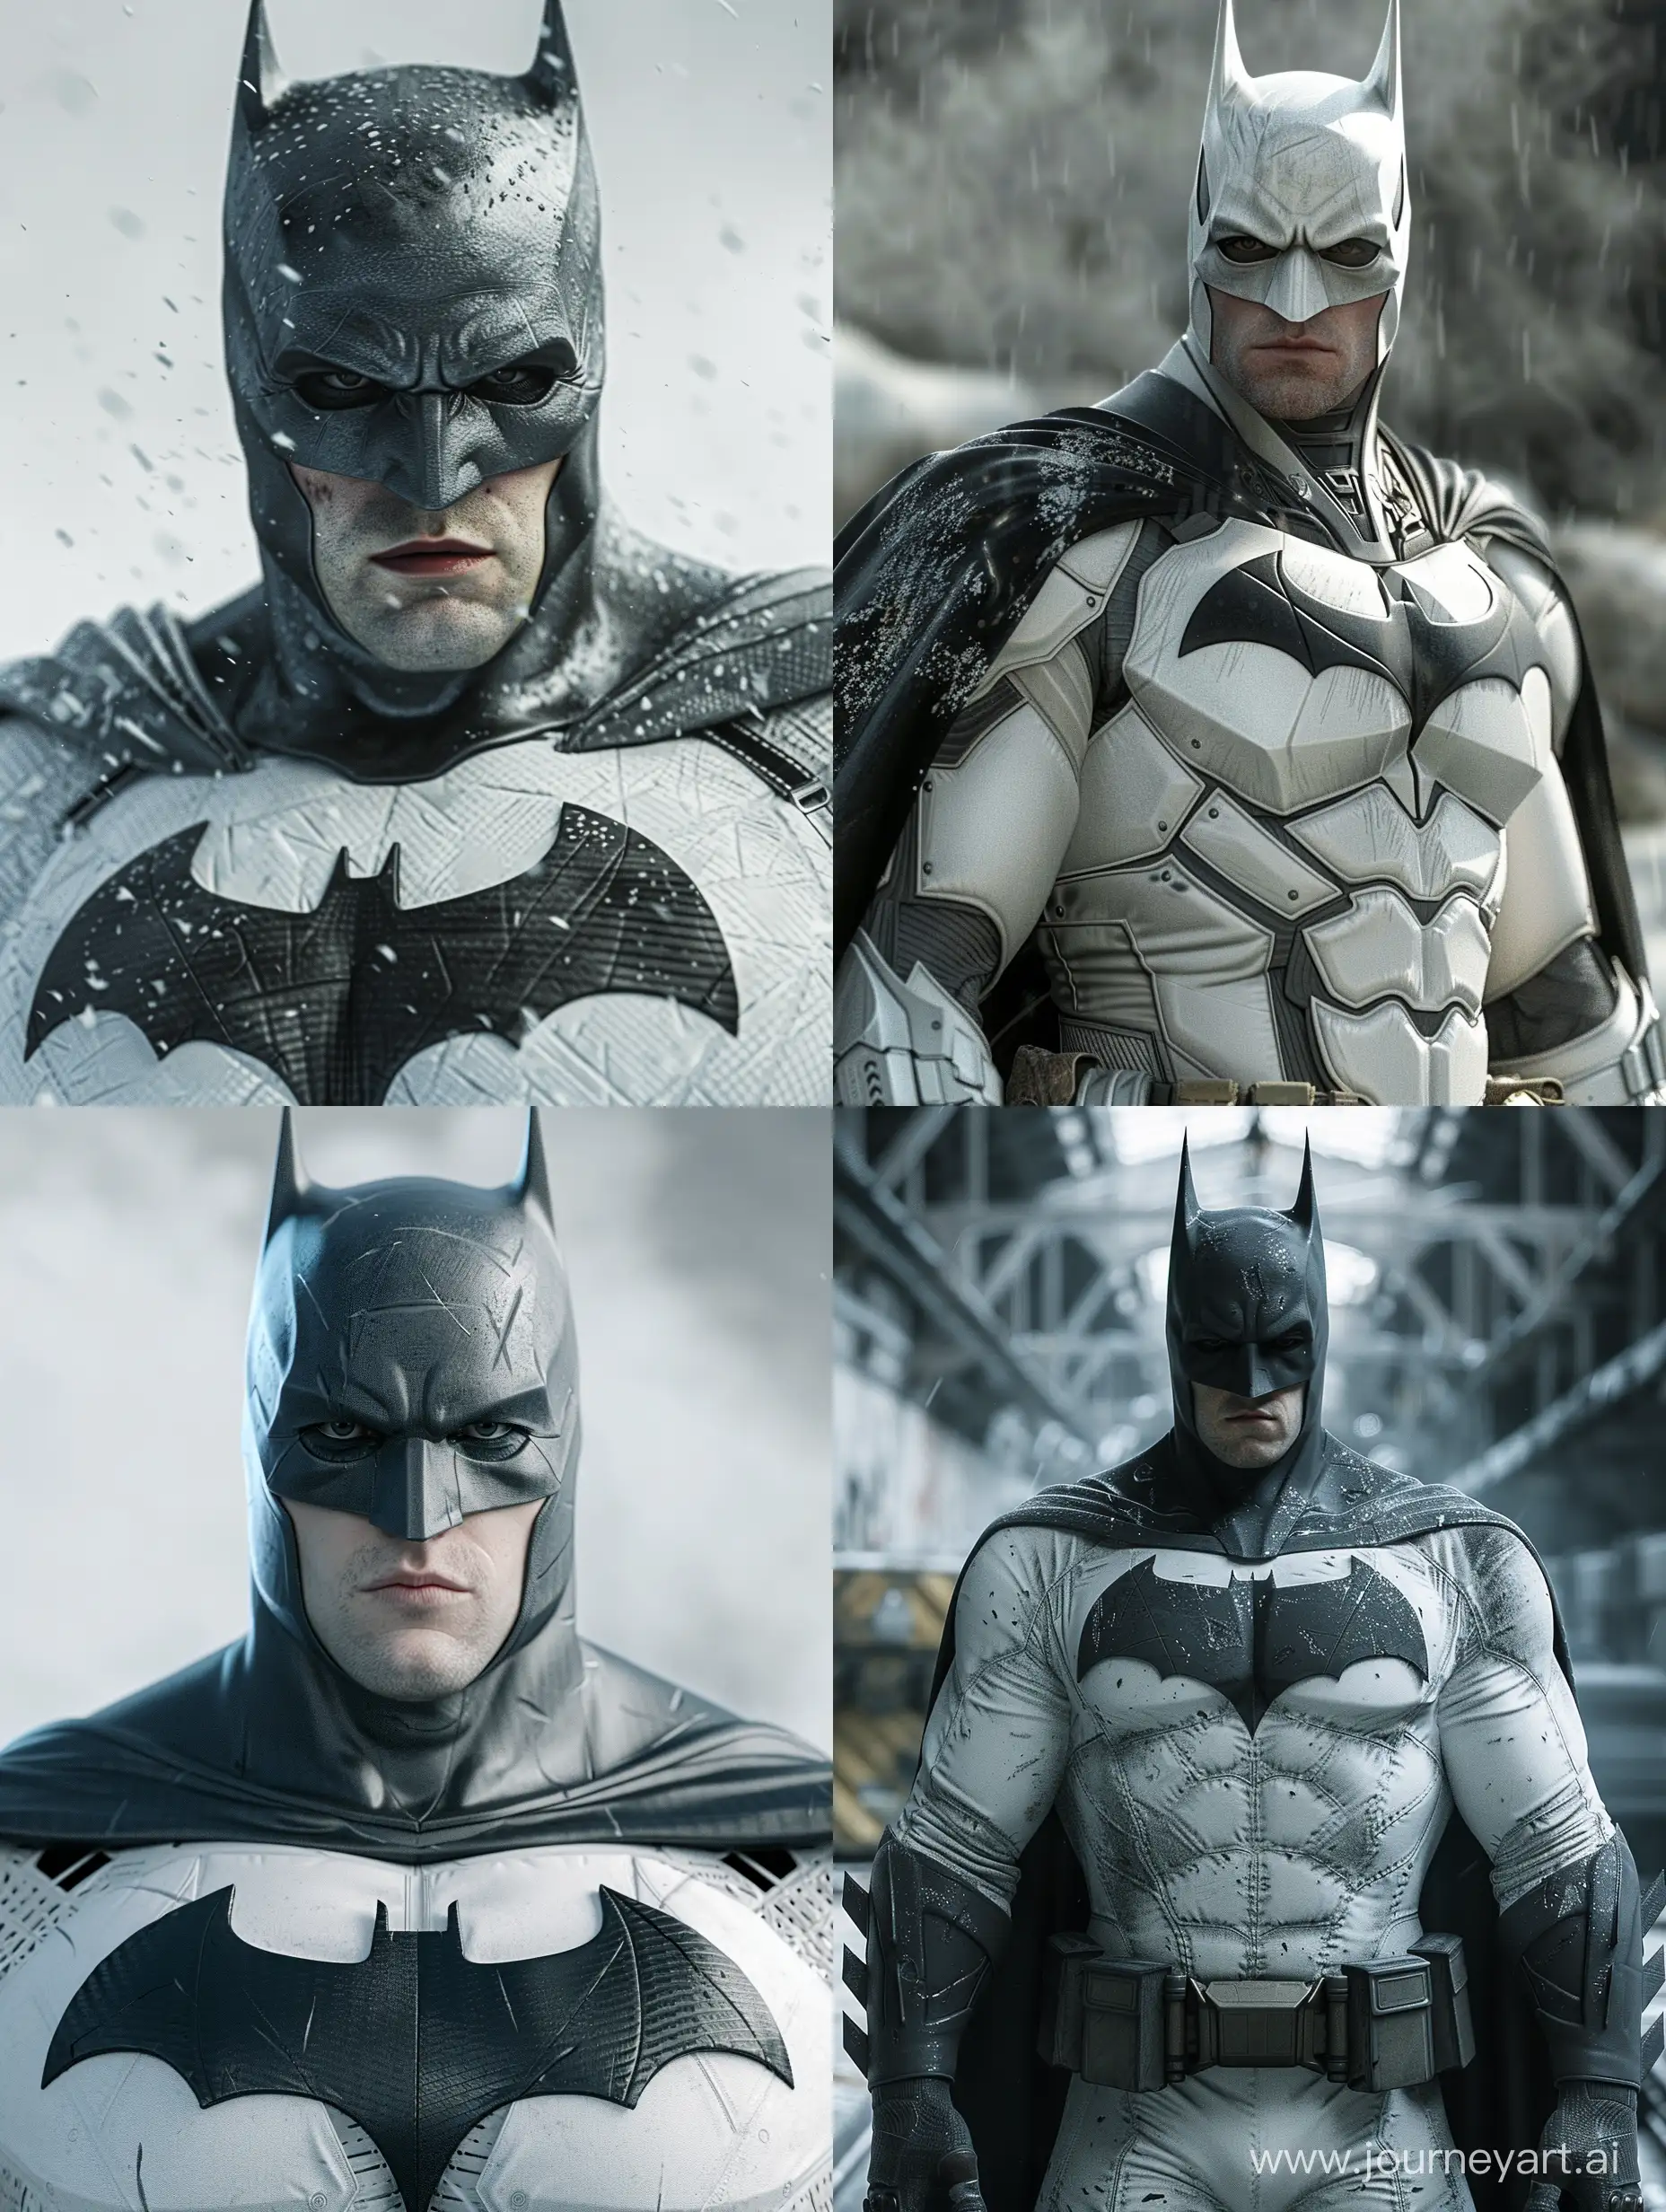 Robert-Pattinson-as-Batman-UltraRealistic-3D-Render-with-Cinematic-Lighting